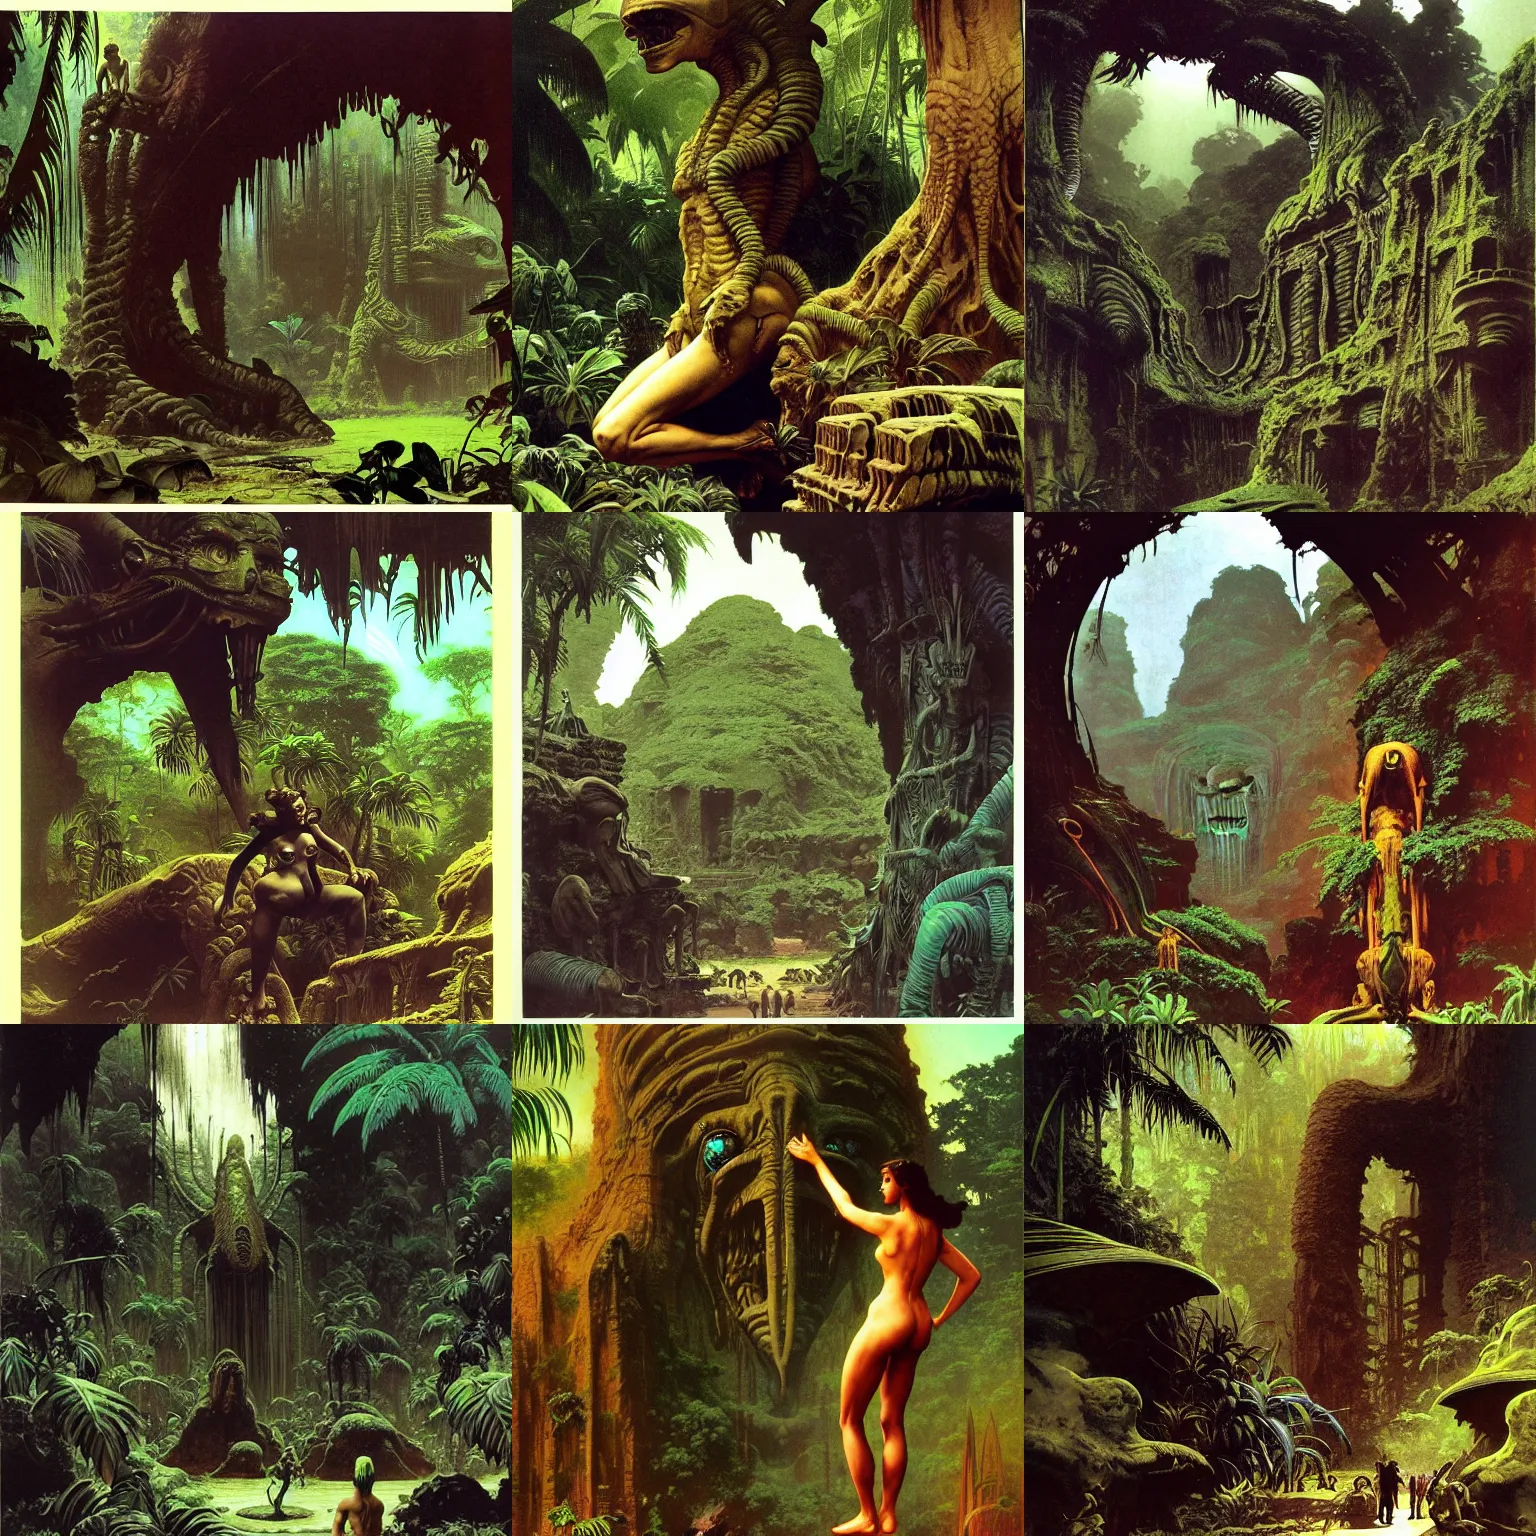 Prompt: asimov alien deep ancient jungle fantasy ruins flora fauna by syd mead, frank frazetta, ken kelly, simon bisley, richard corben, william - adolphe bouguereau